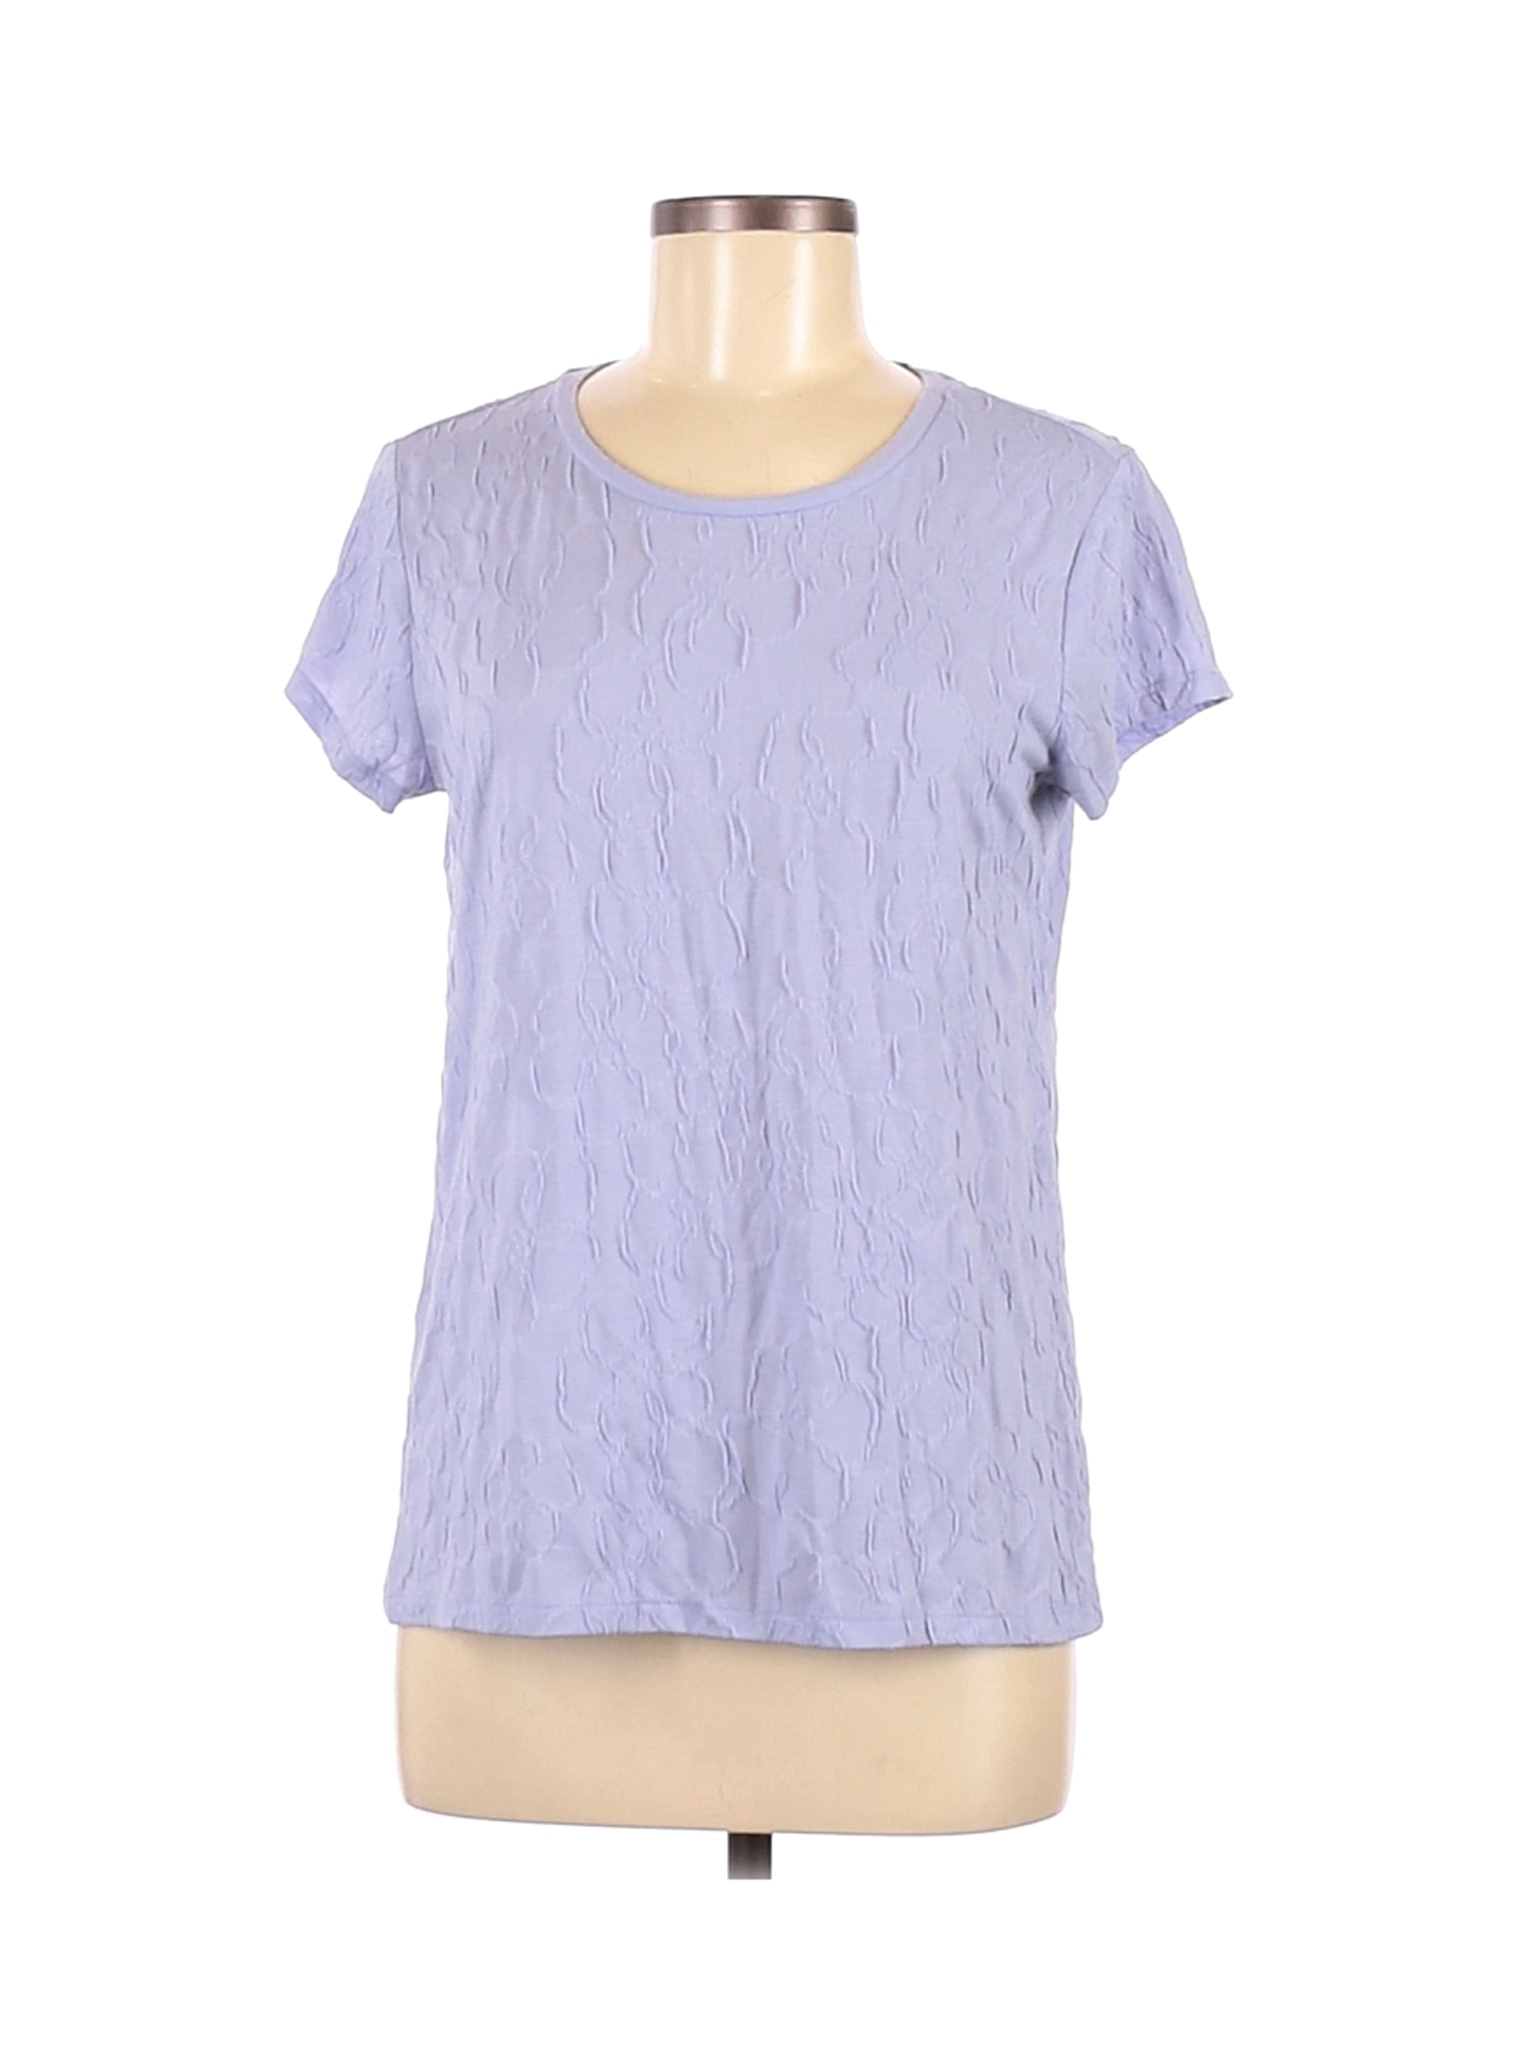 Simply Vera Vera Wang Women Purple Short Sleeve Top M | eBay